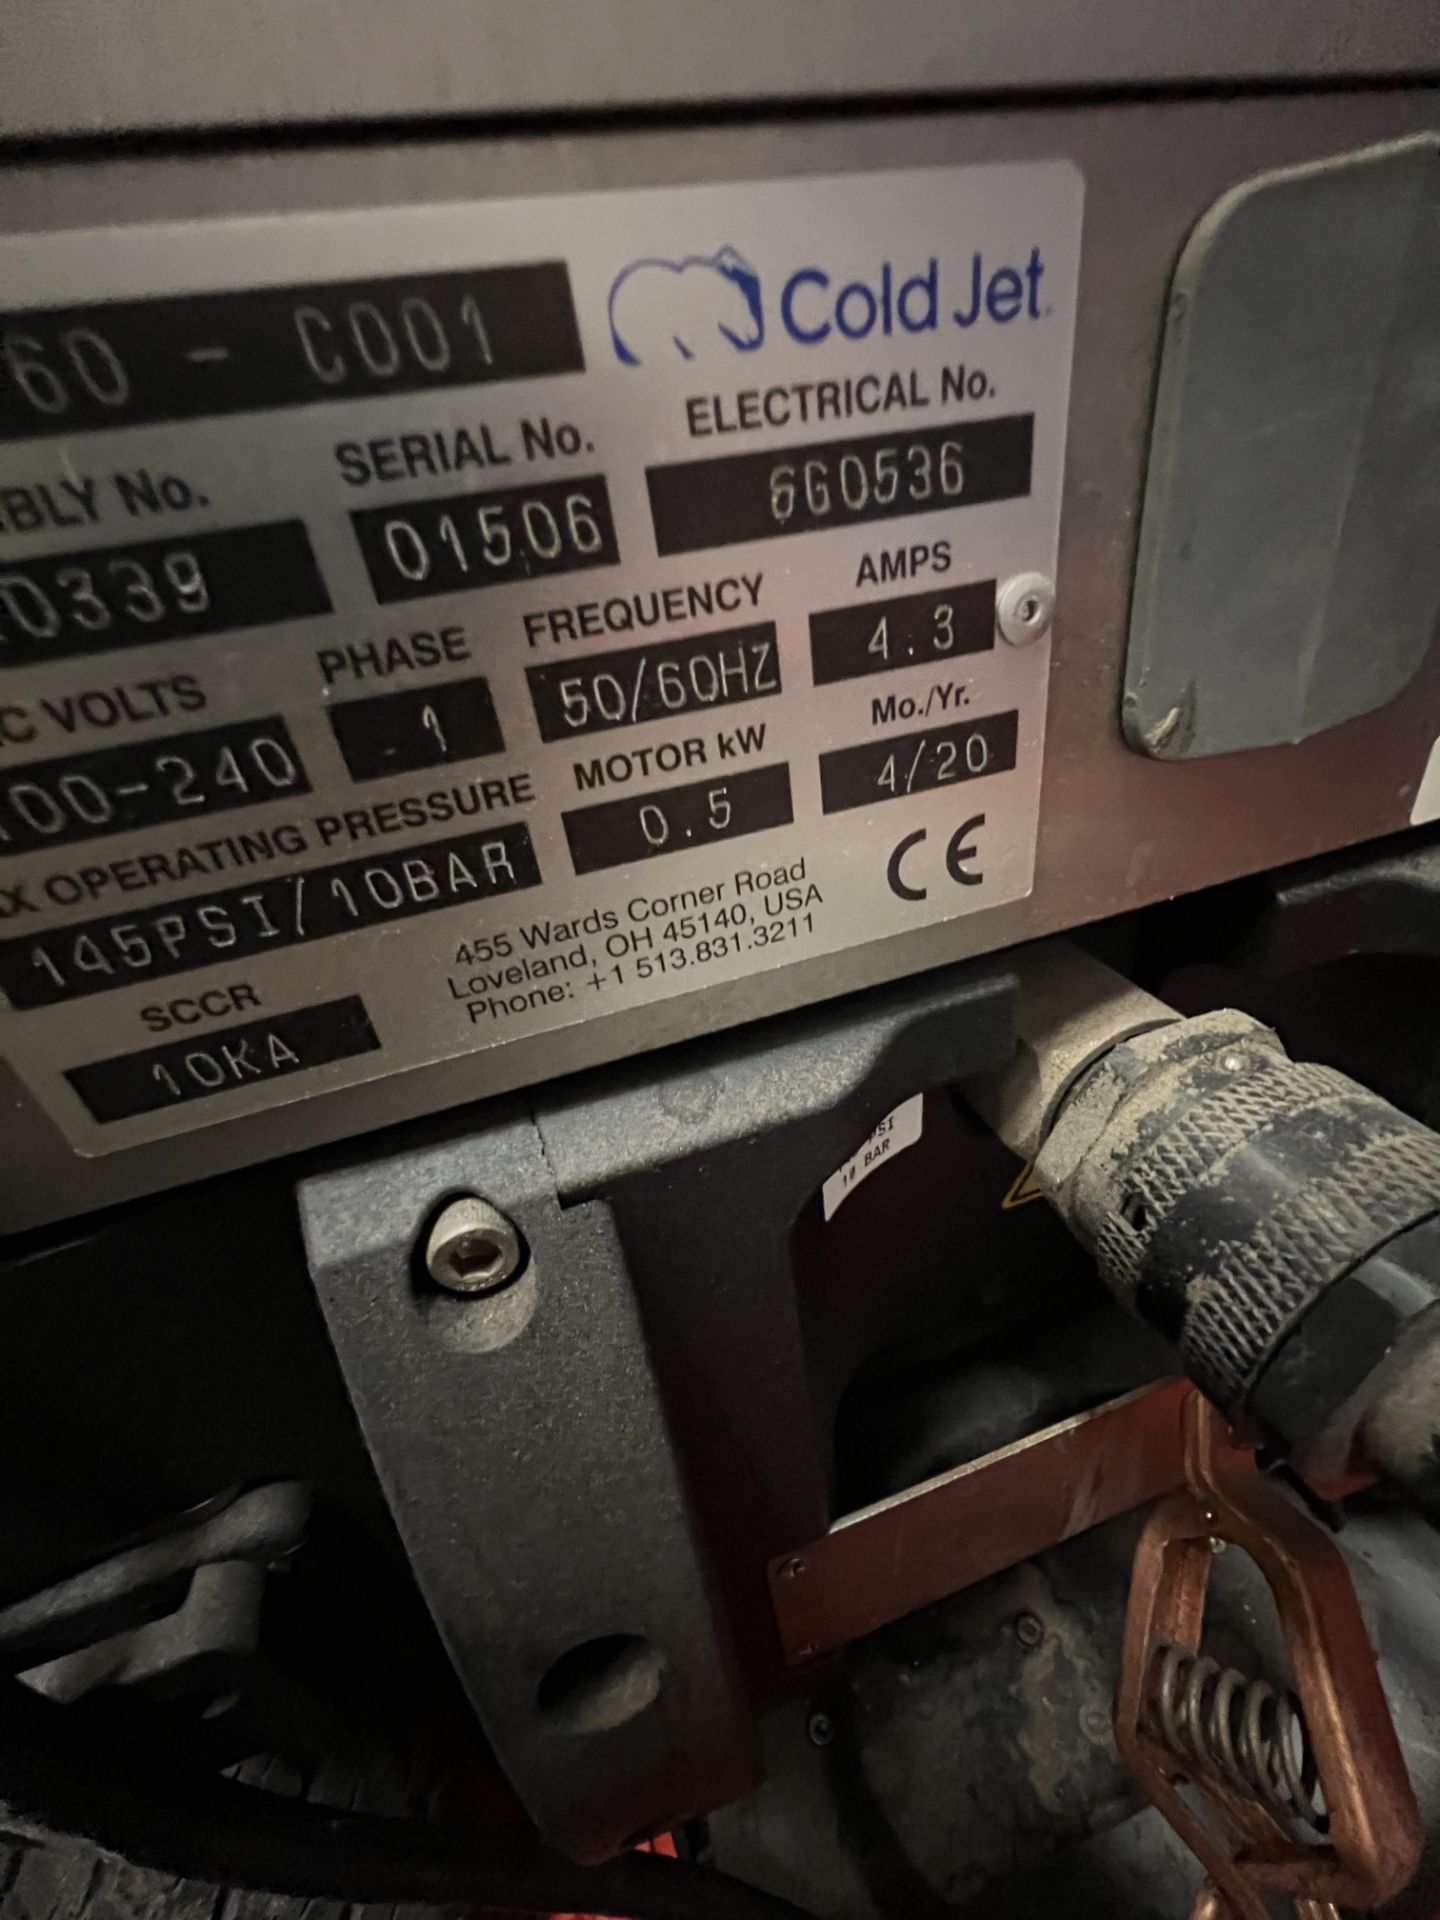 2020 COLD JET DRY ICE BLASTING MACHINE, MODEL PCS 60 - C001, S/N 01506, 100 - 240 V, 1 PHASE - Image 8 of 9